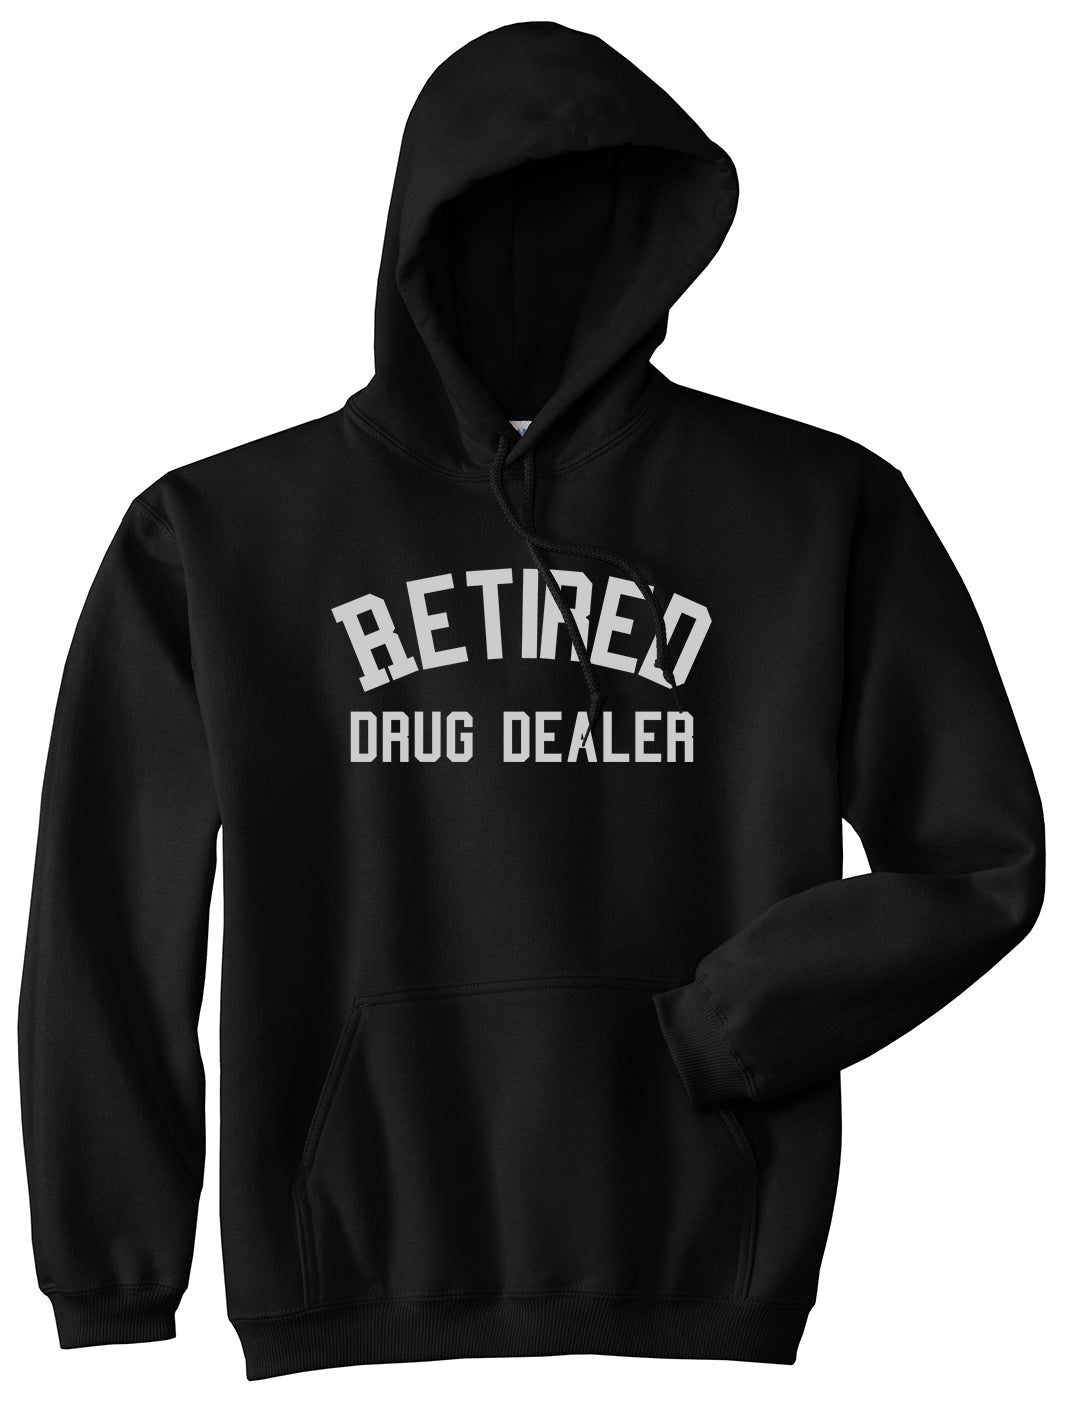 Retired Drug Dealer Mens Black Pullover Hoodie by Kings Of NY